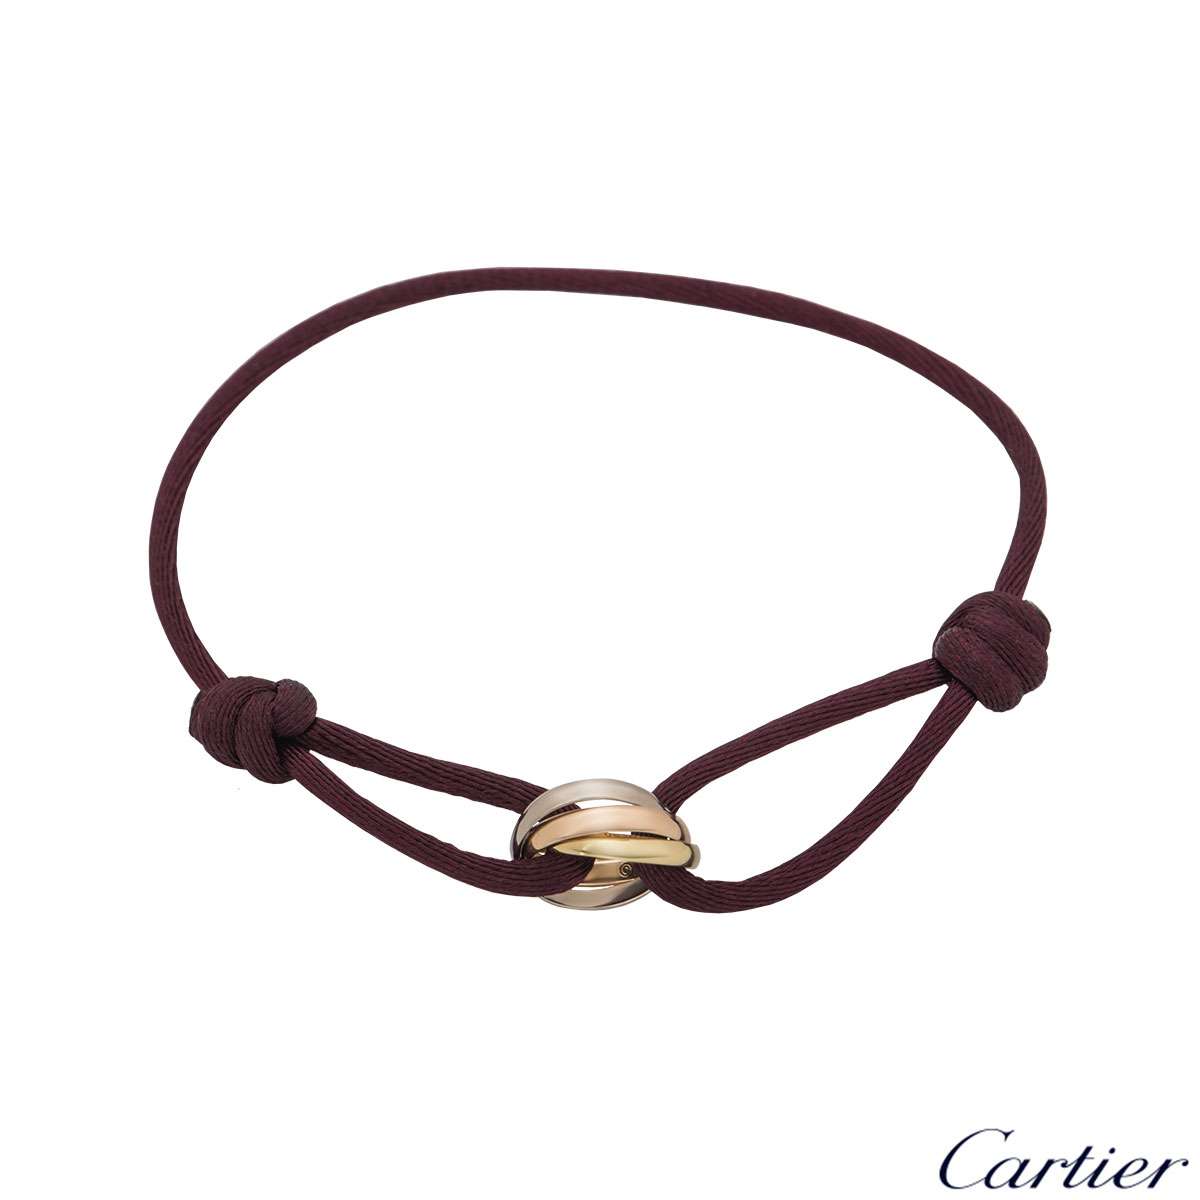 where can i buy cartier trinity bracelet